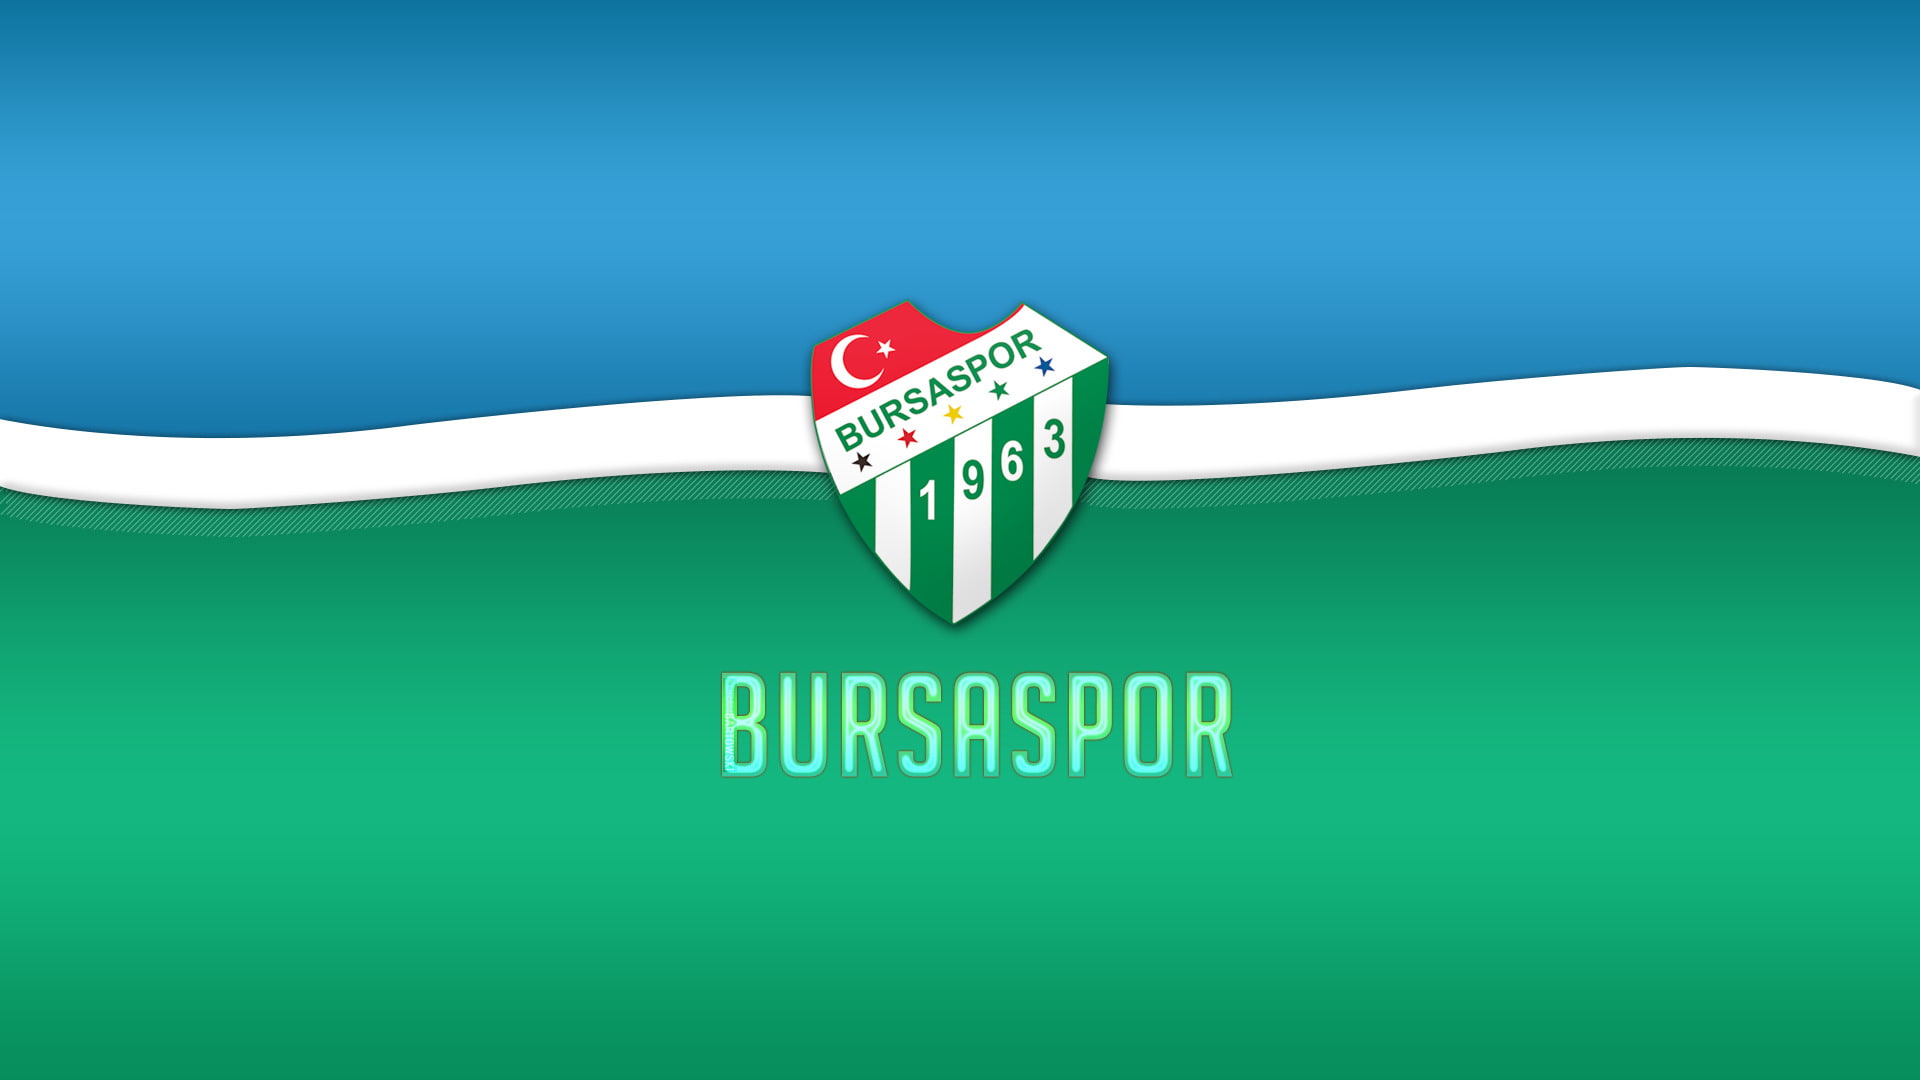 bursaspor green sports, blue, green color, sign, communication